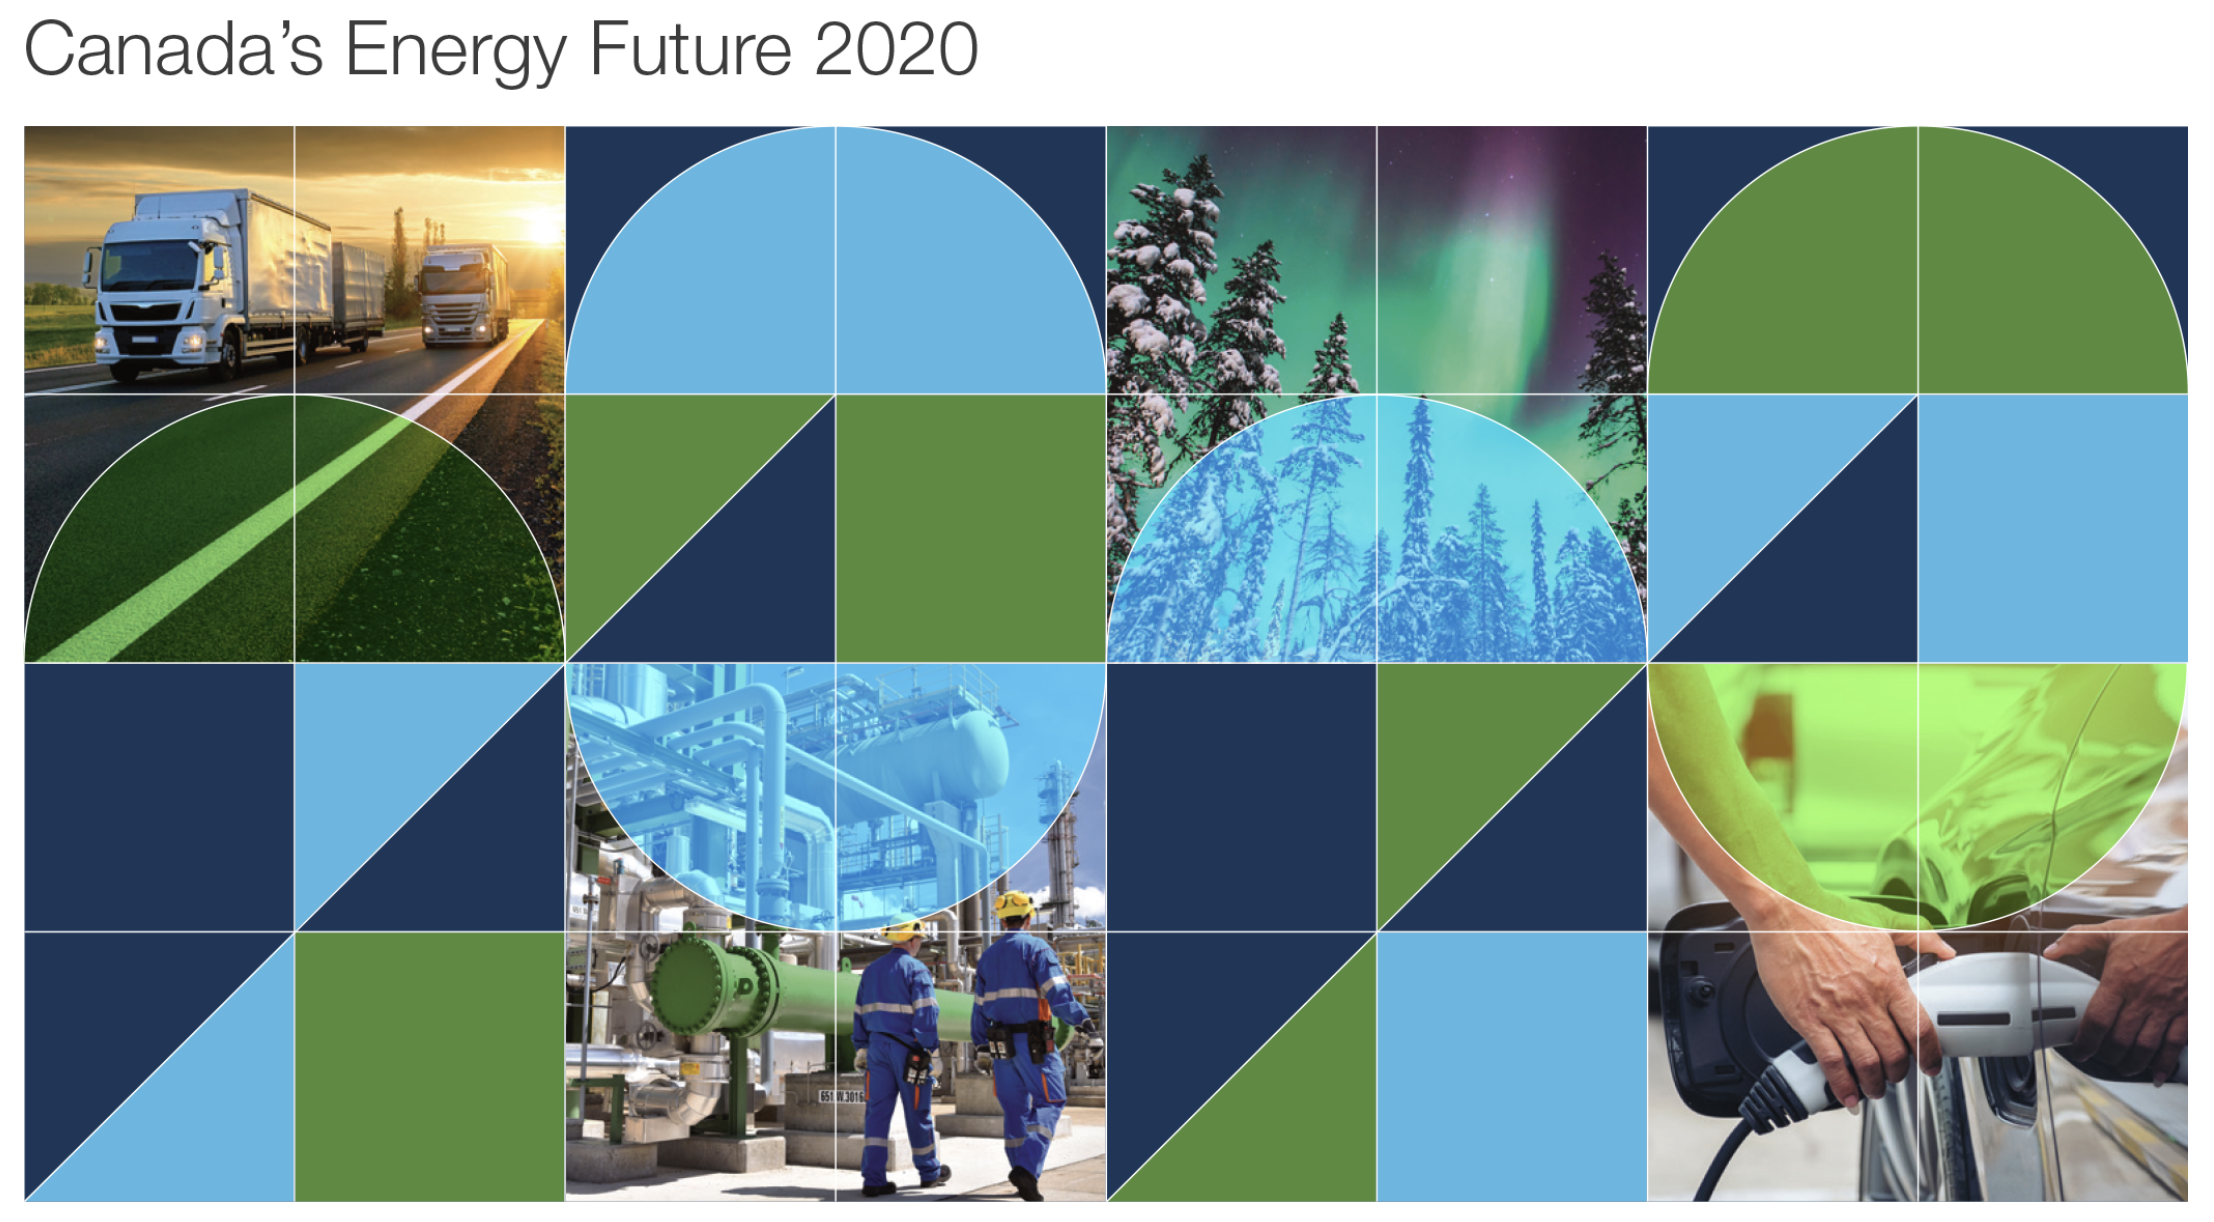 Canada’s Energy Future feature image